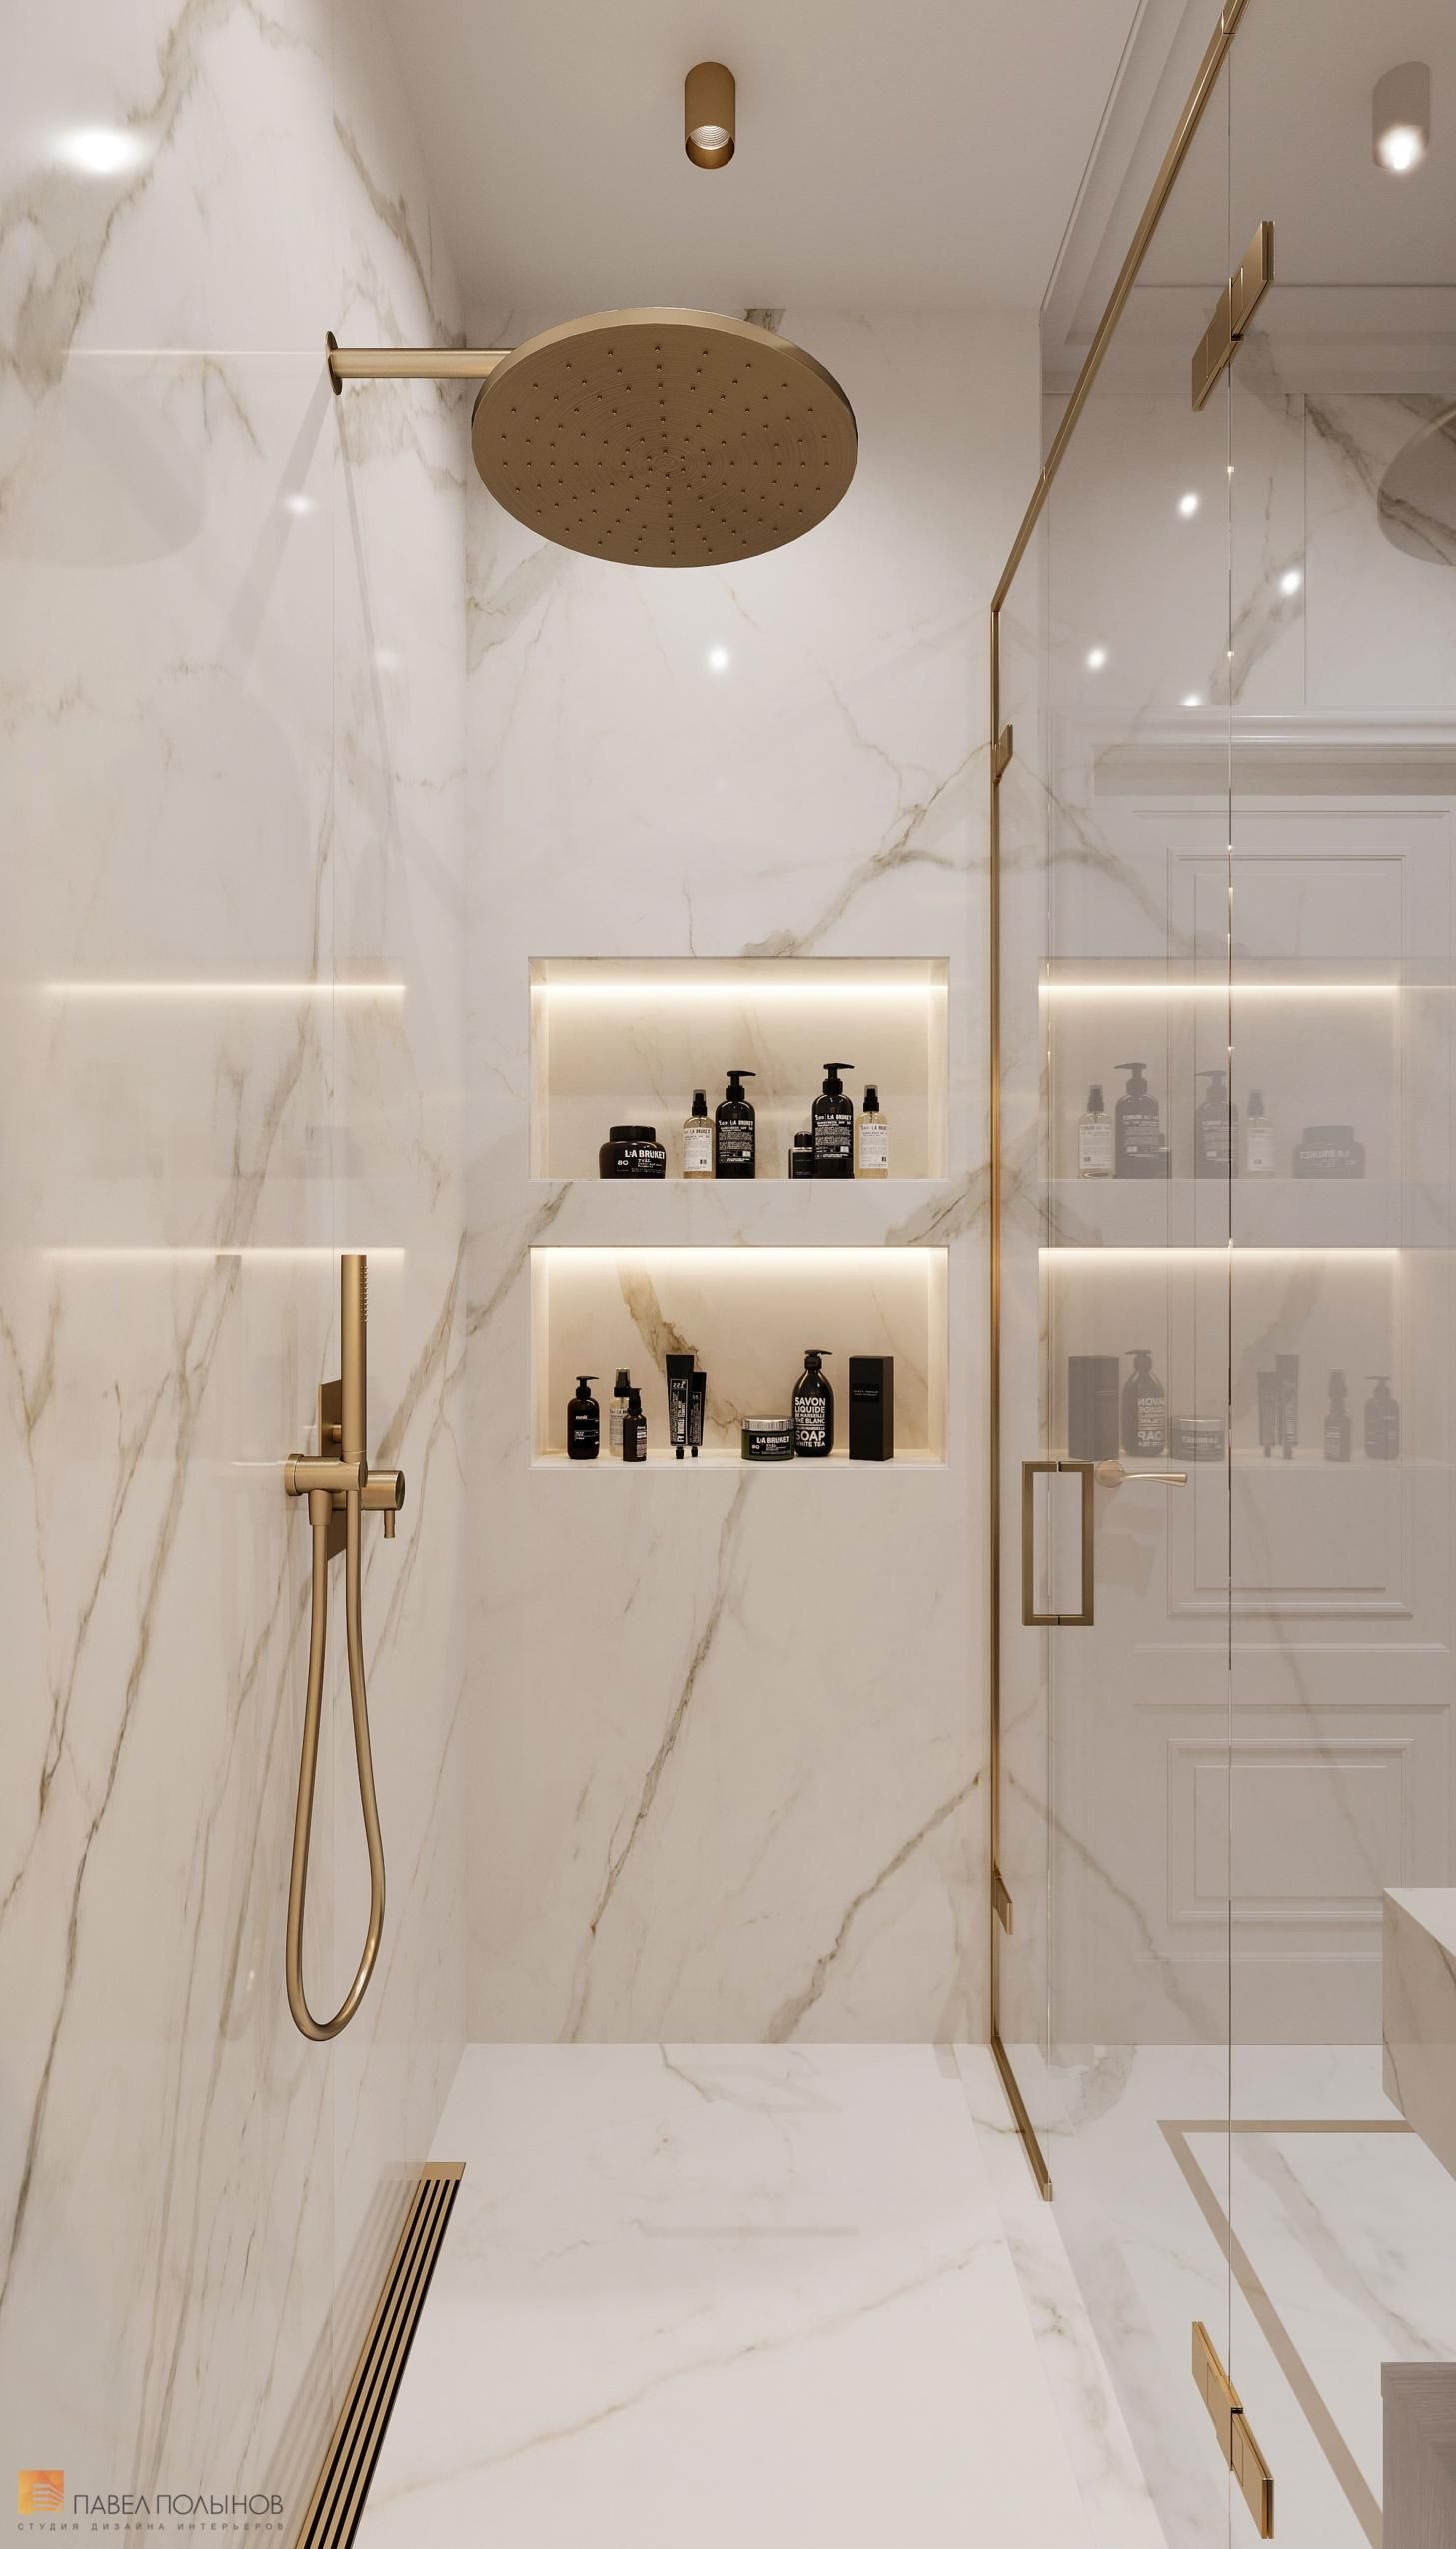 How to select a bathroom mirror – ideas